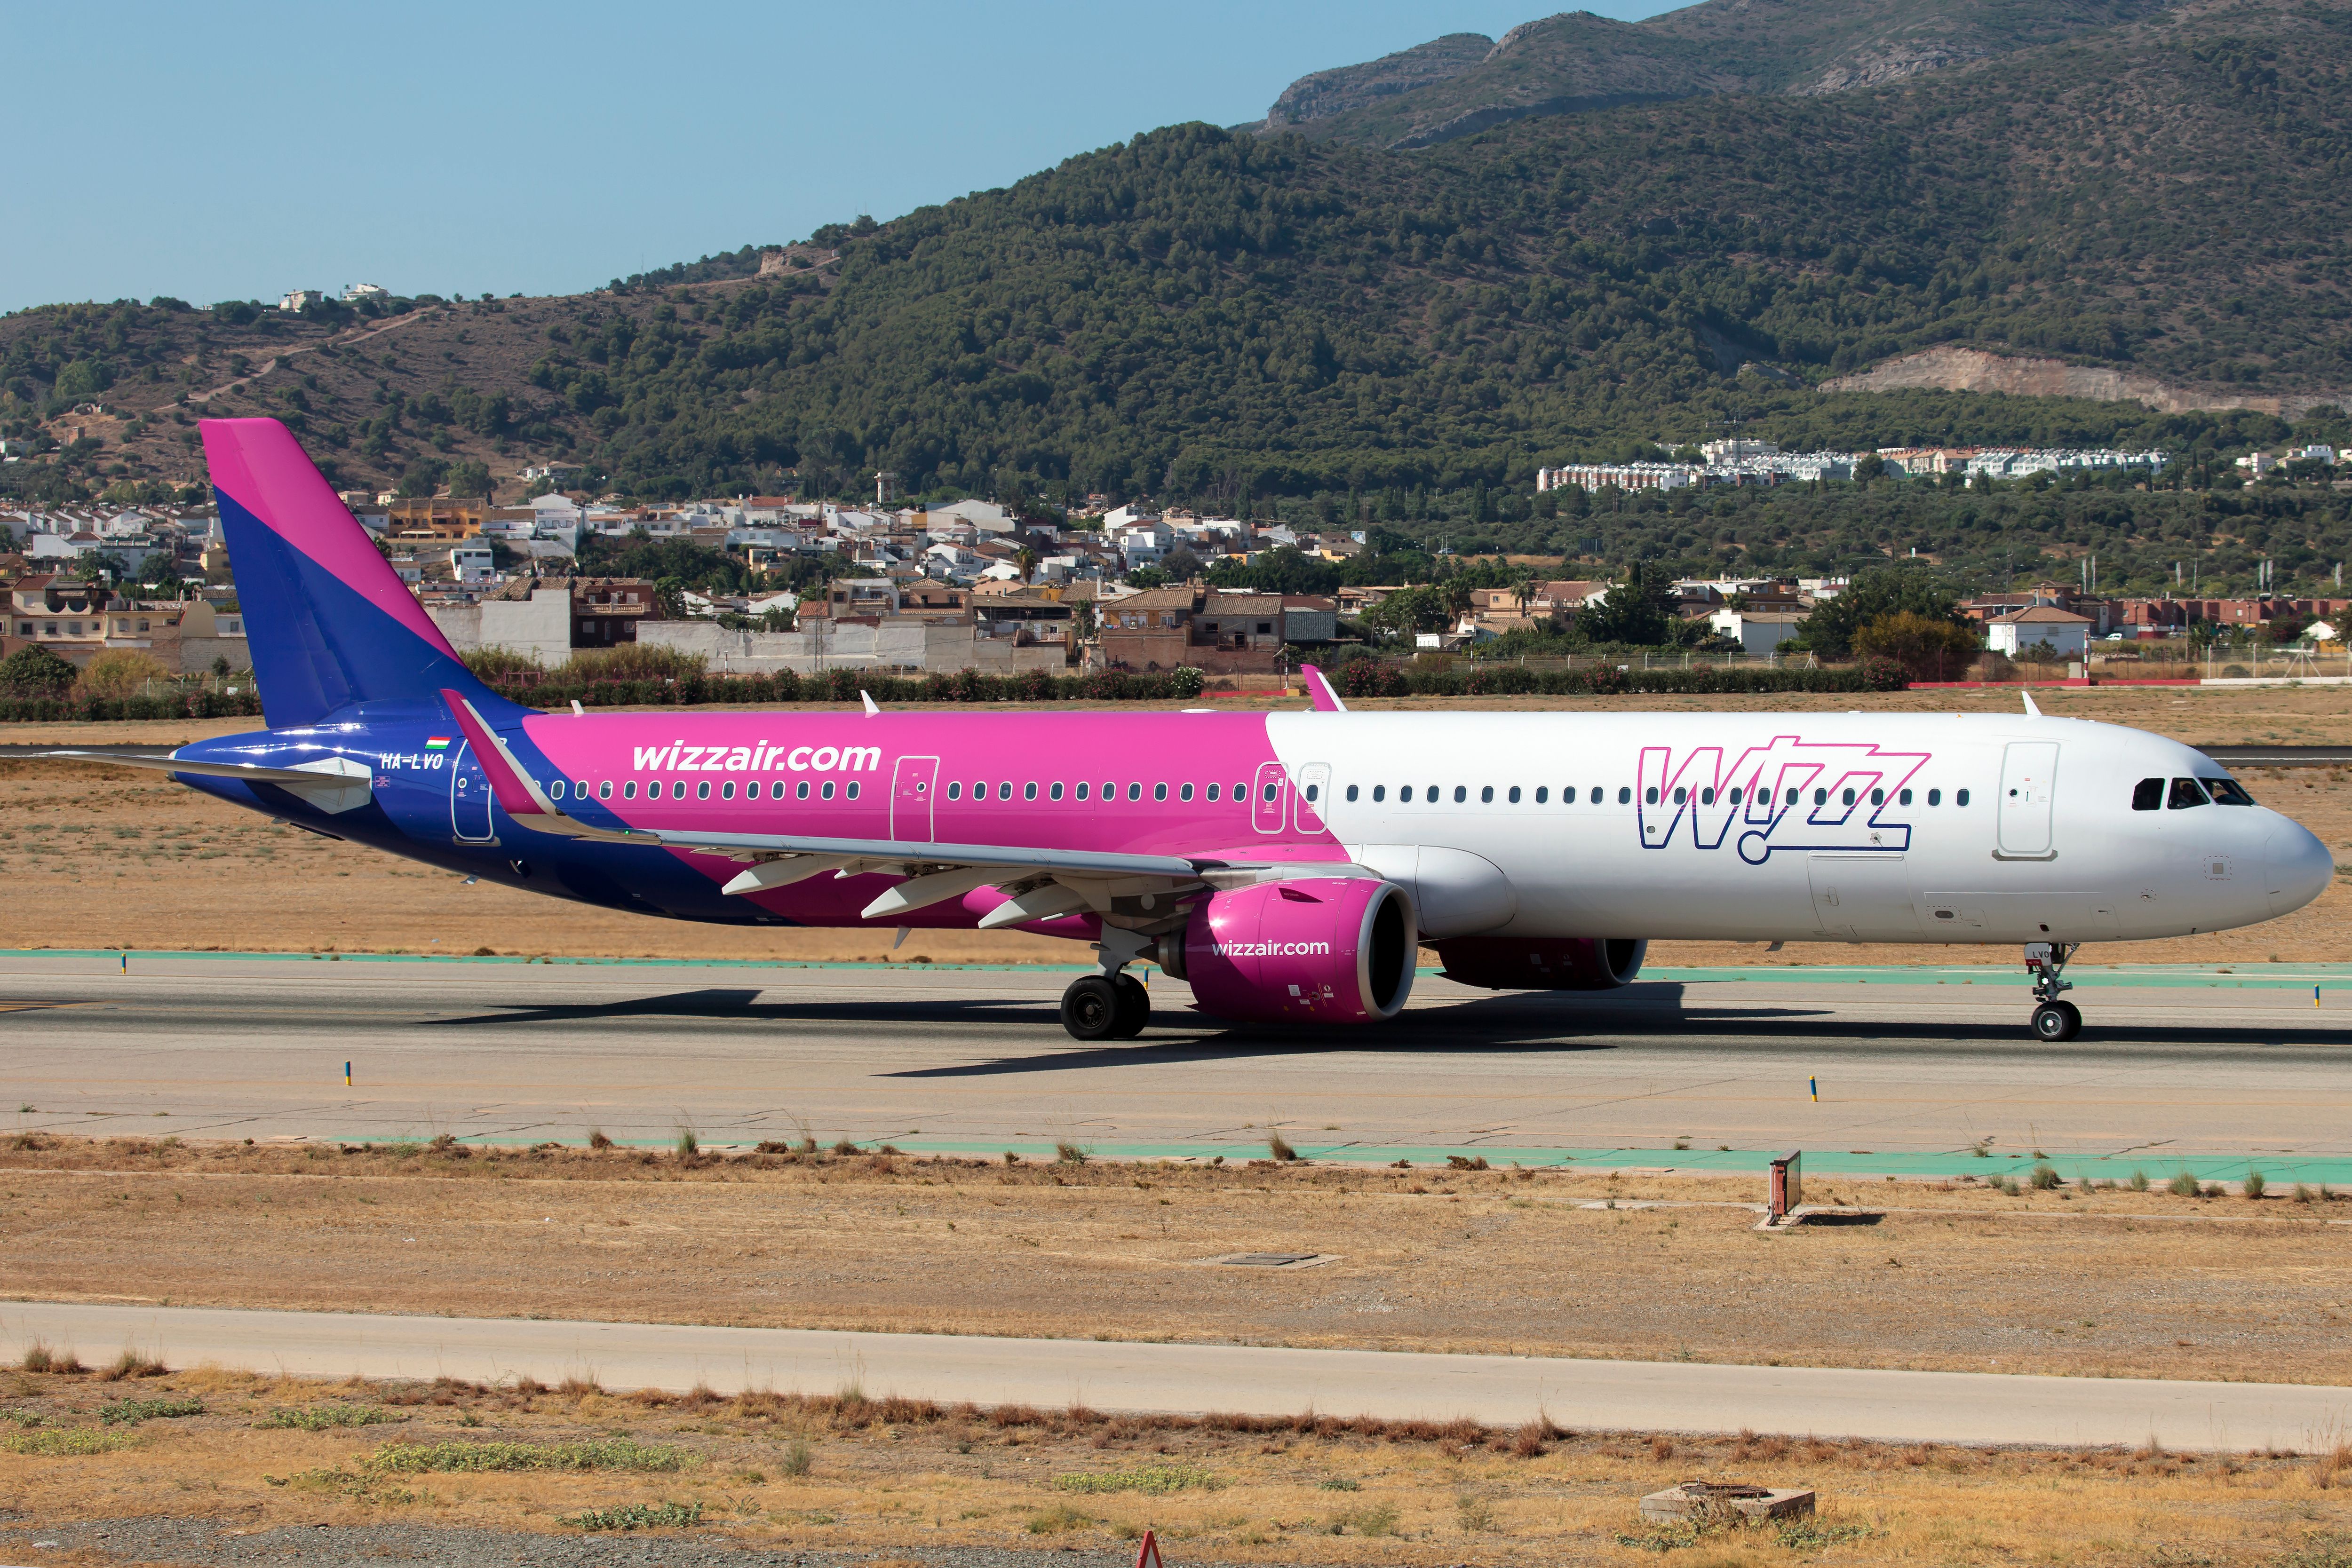 Wizz Air A321 aircraft at Malaga airport 